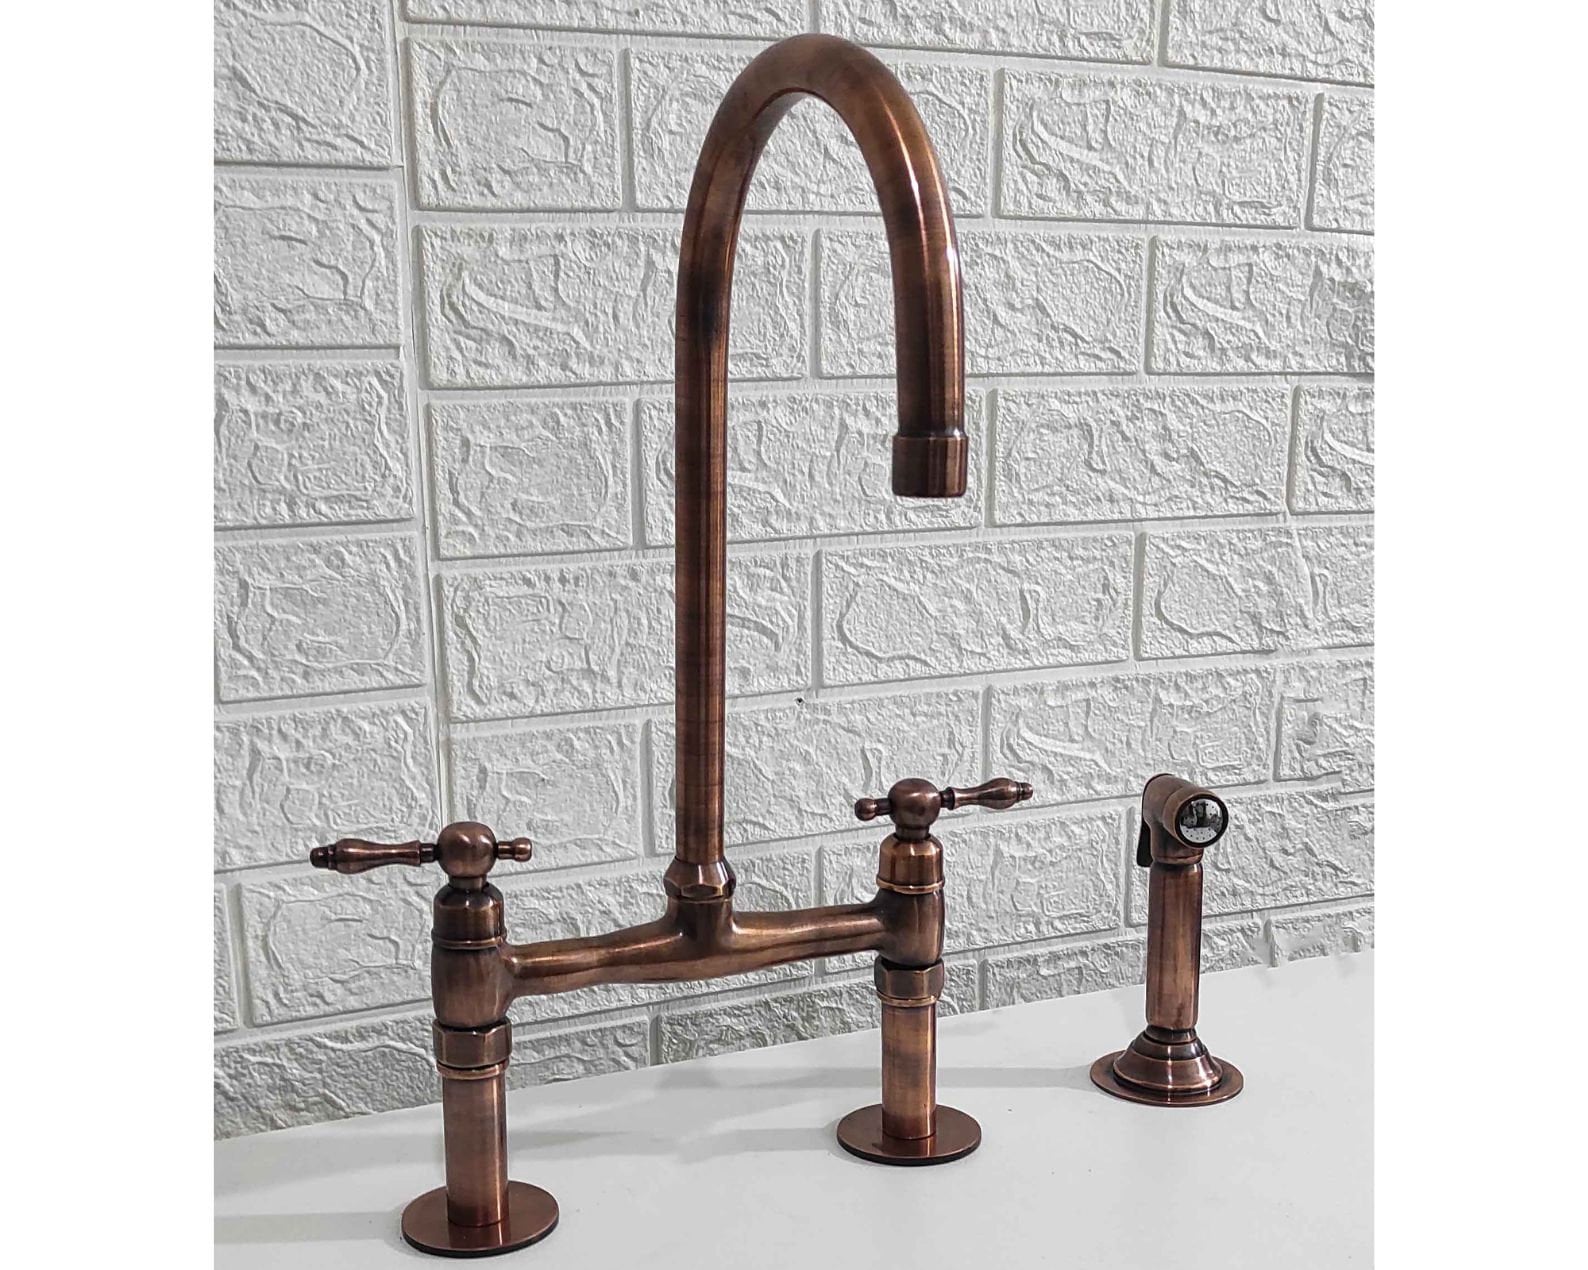 Copper Bridge Faucet for Kitchen - Solid Brass Kitchen Faucet with Lever Handles